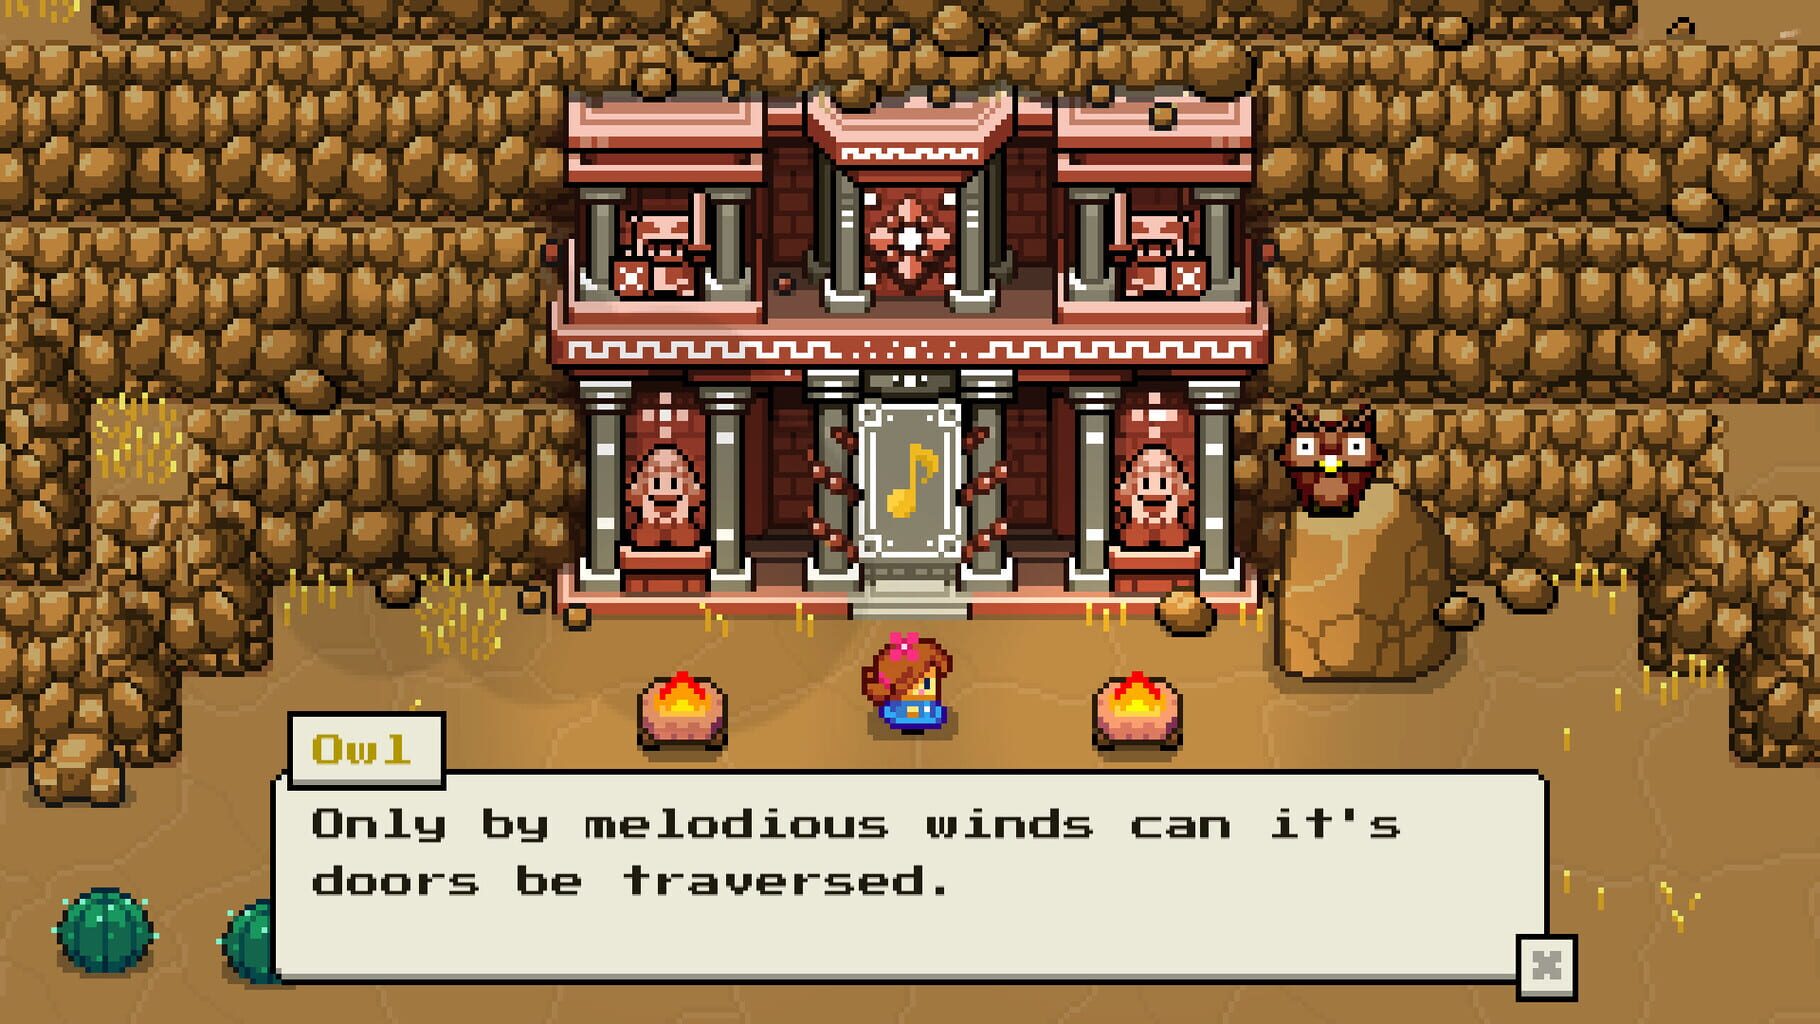 Blossom Tales 2: The Minotaur Prince screenshot